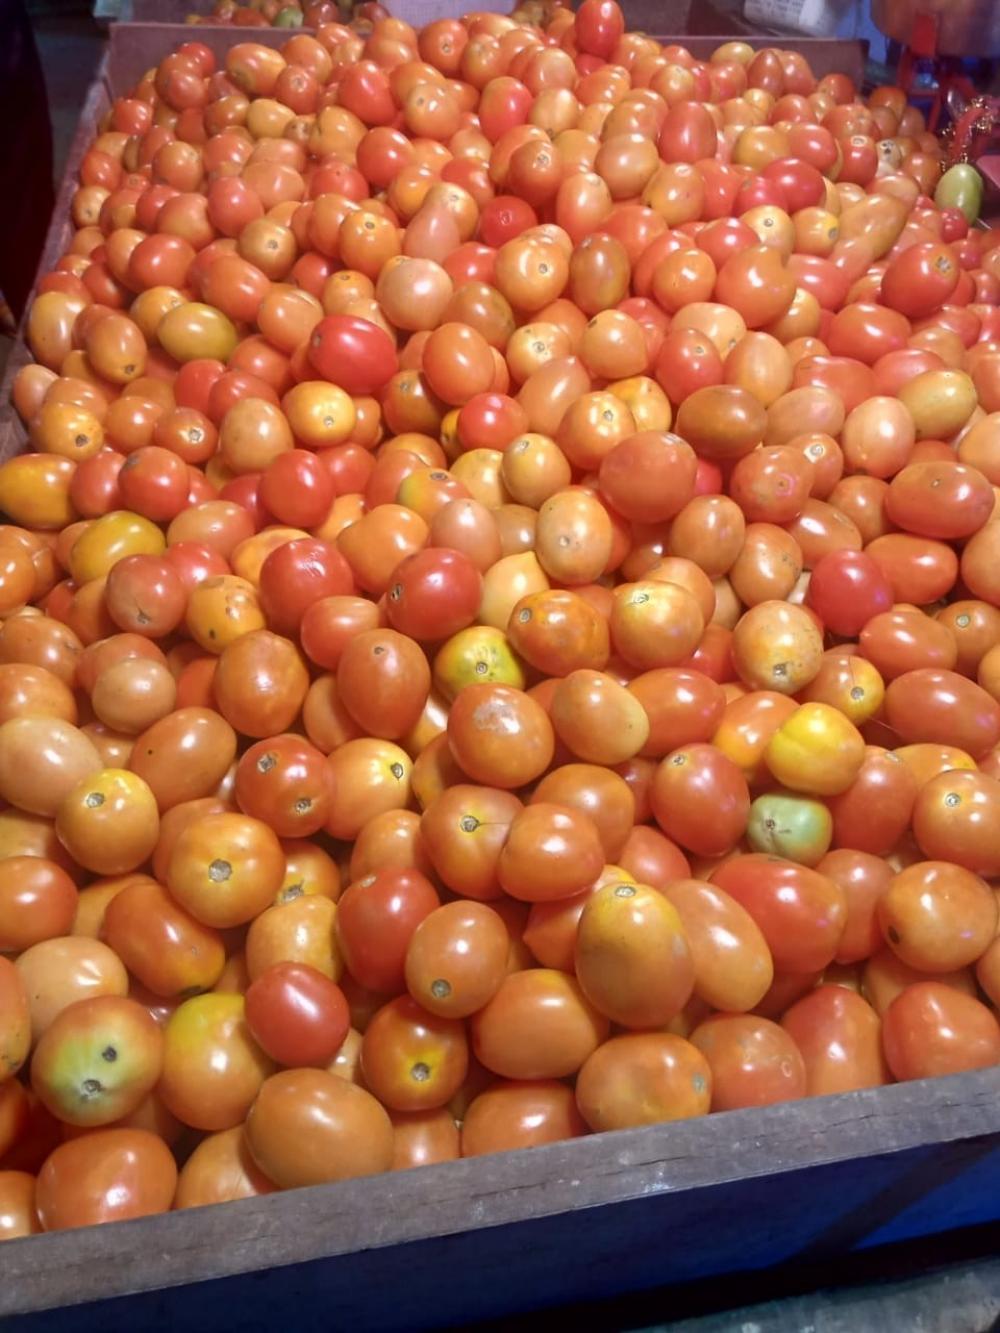 The Weekend Leader - 10 sacks of lemons, 35 crates of tomatoes stolen from Gurugram vegetable market